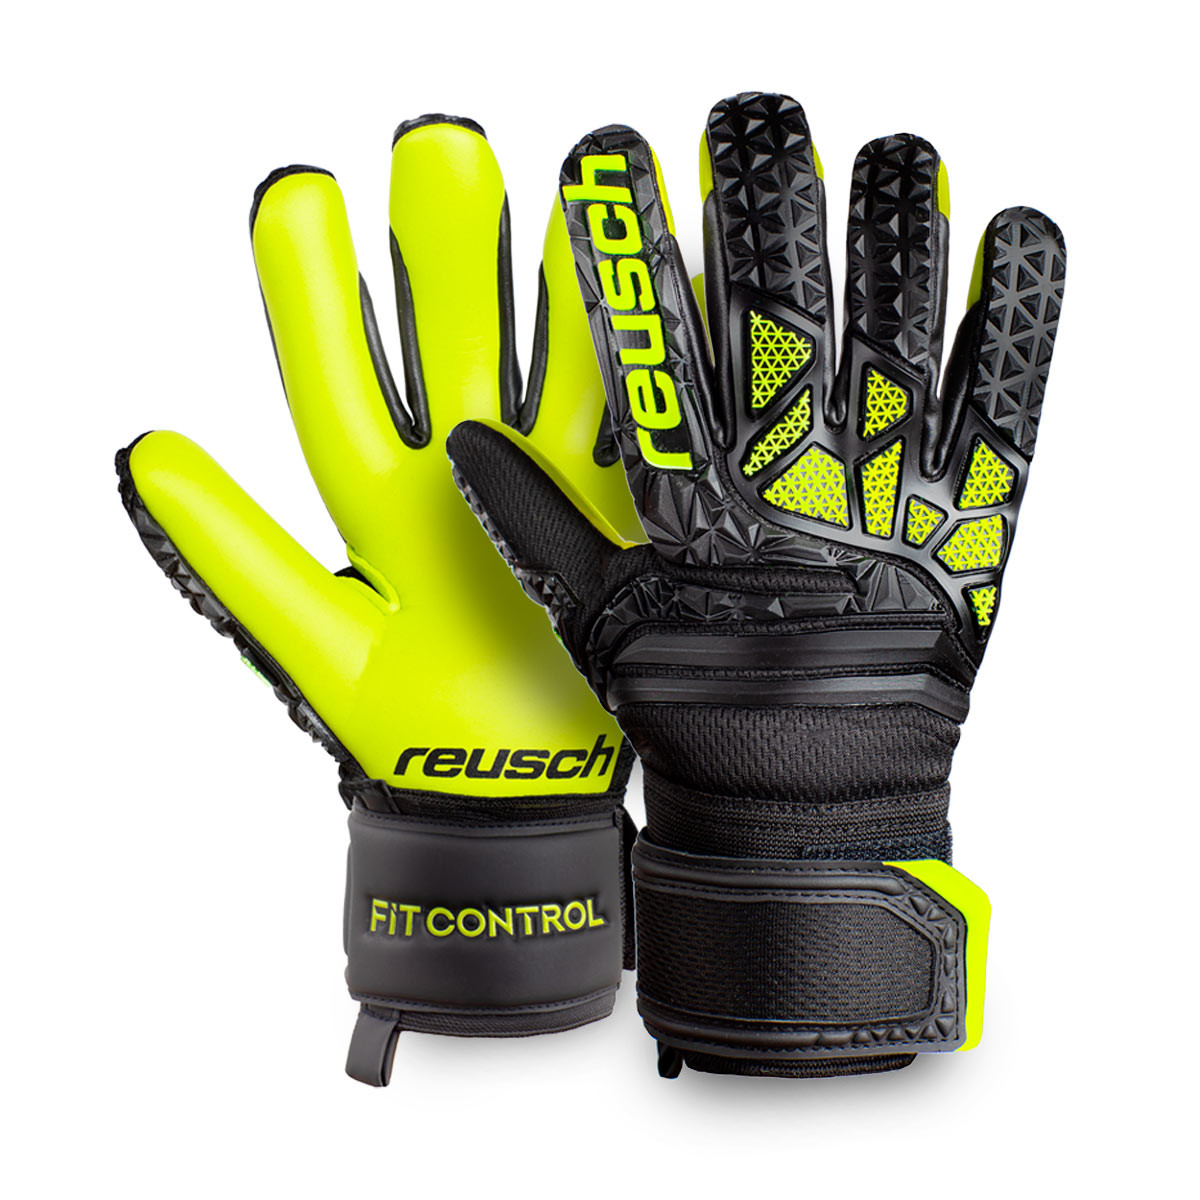 hugo lloris new gloves